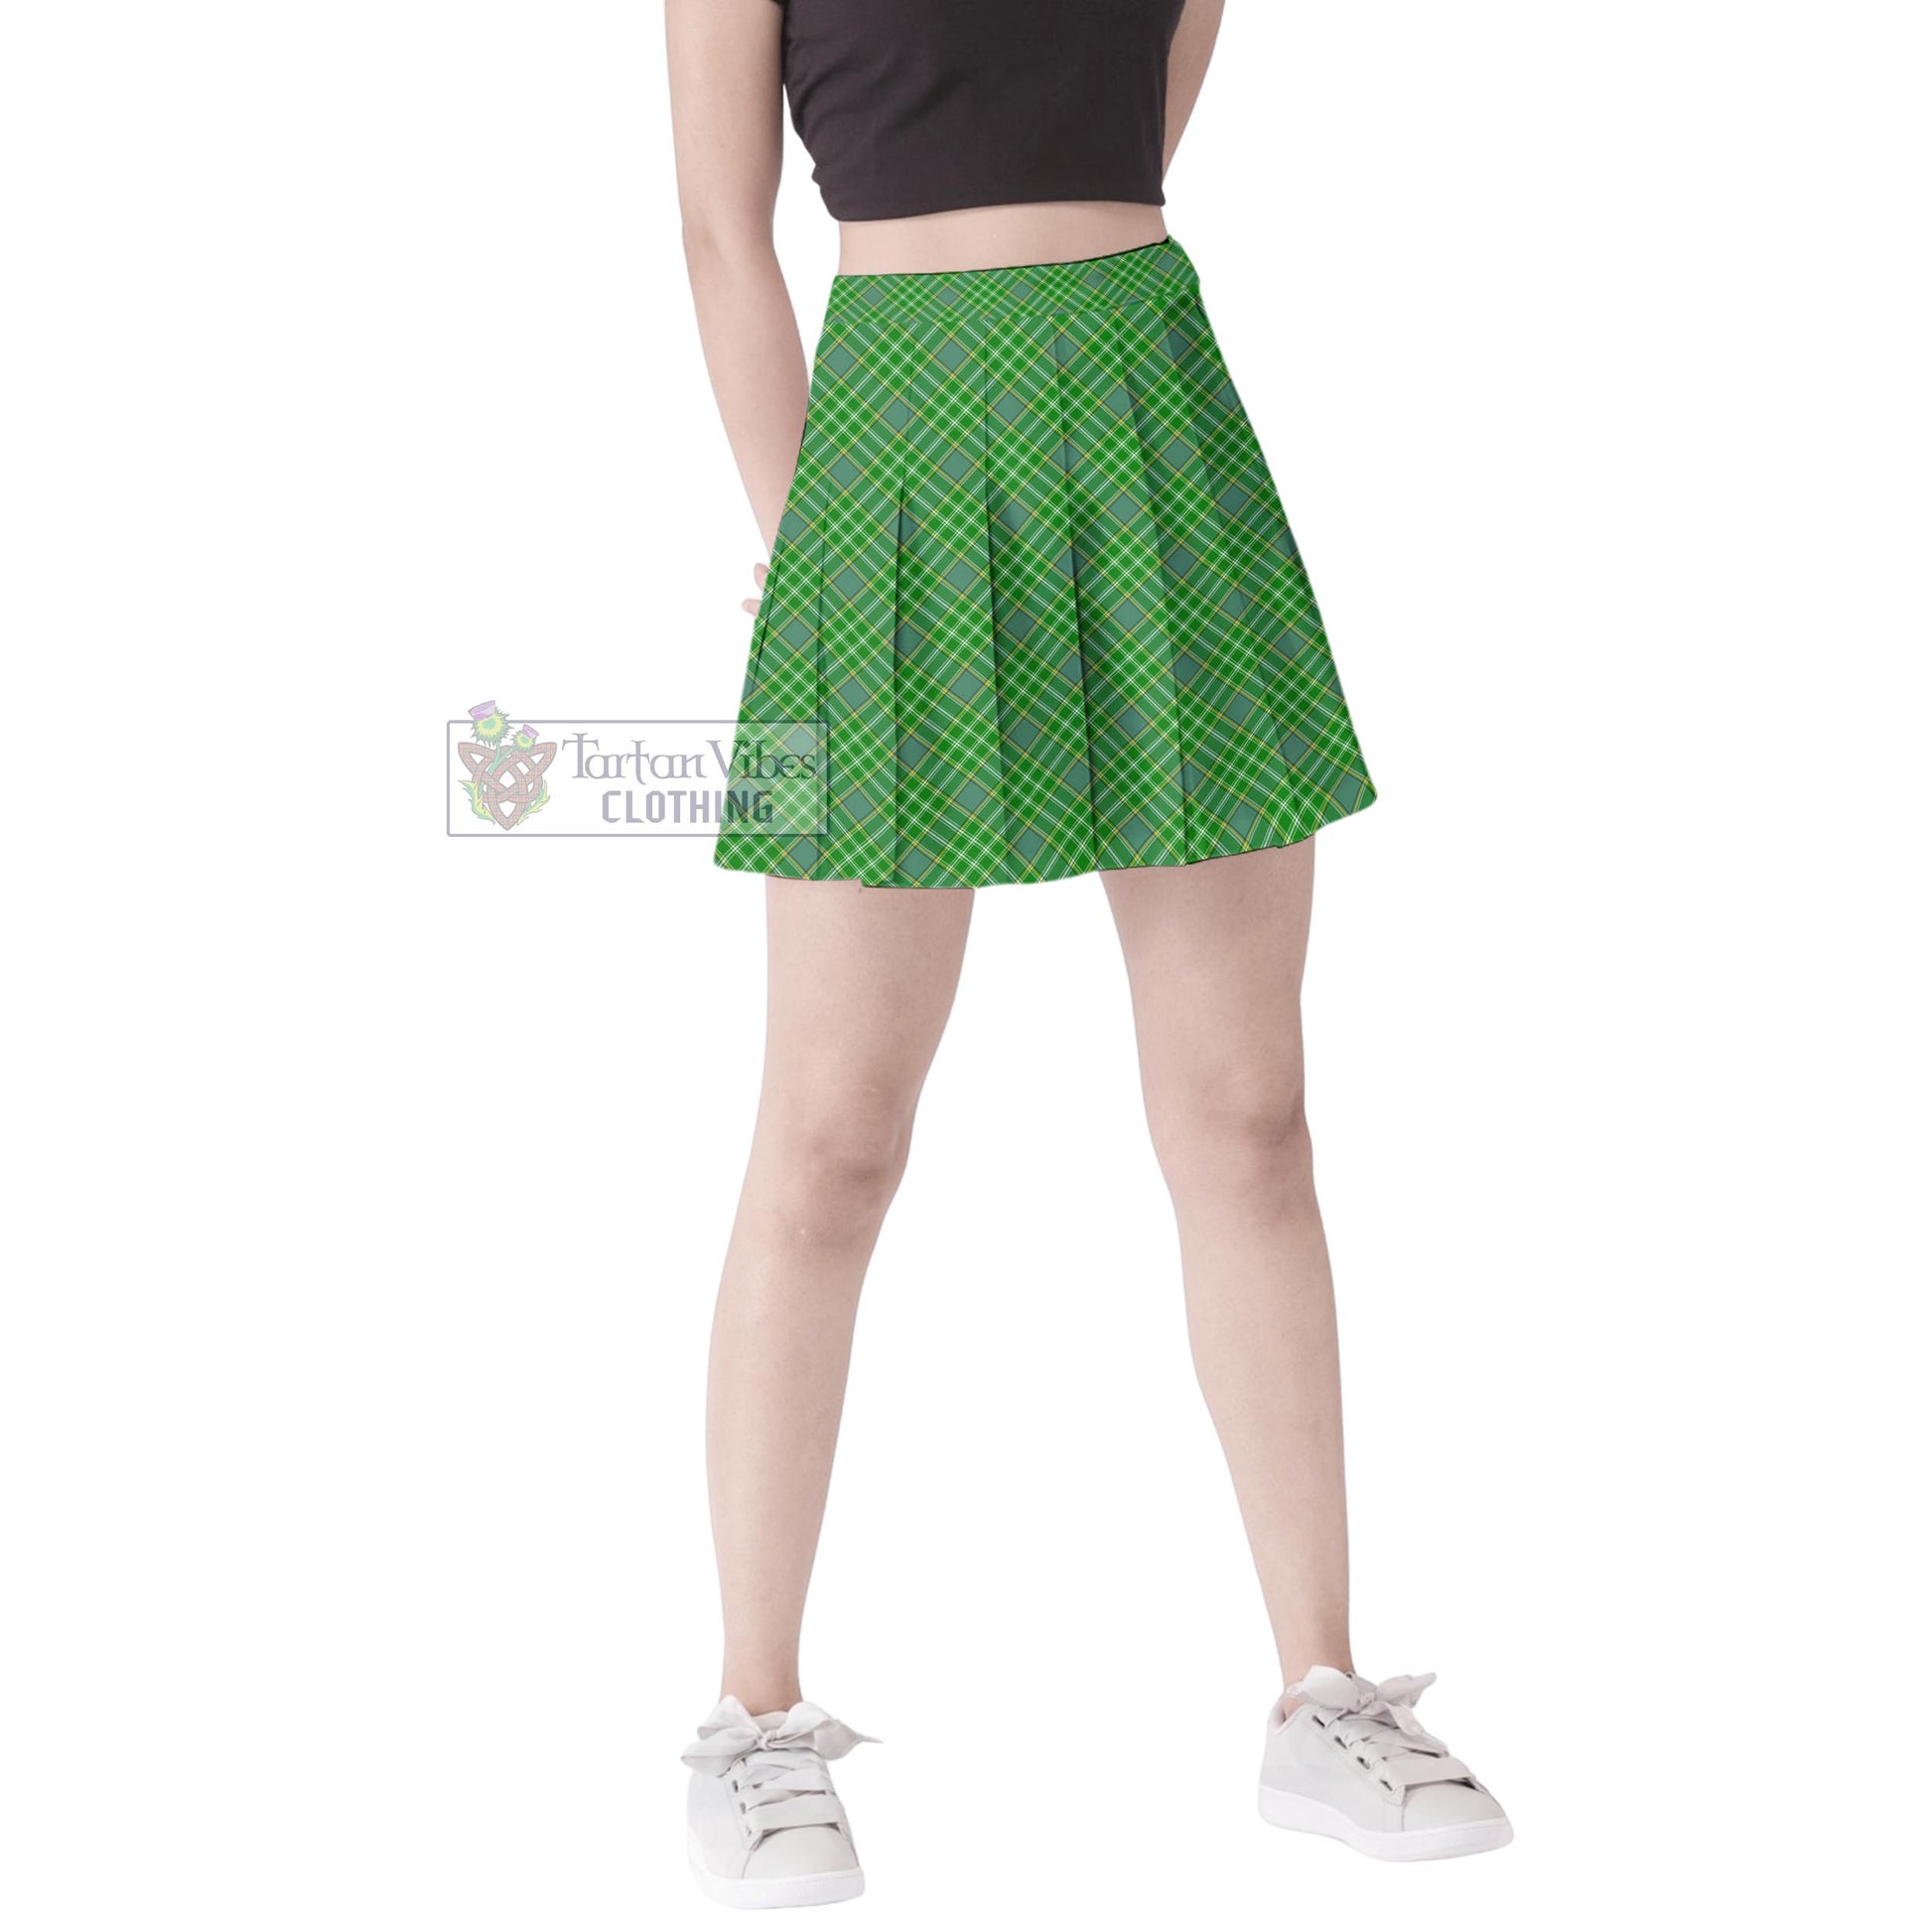 Tartan Vibes Clothing Currie Tartan Women's Plated Mini Skirt